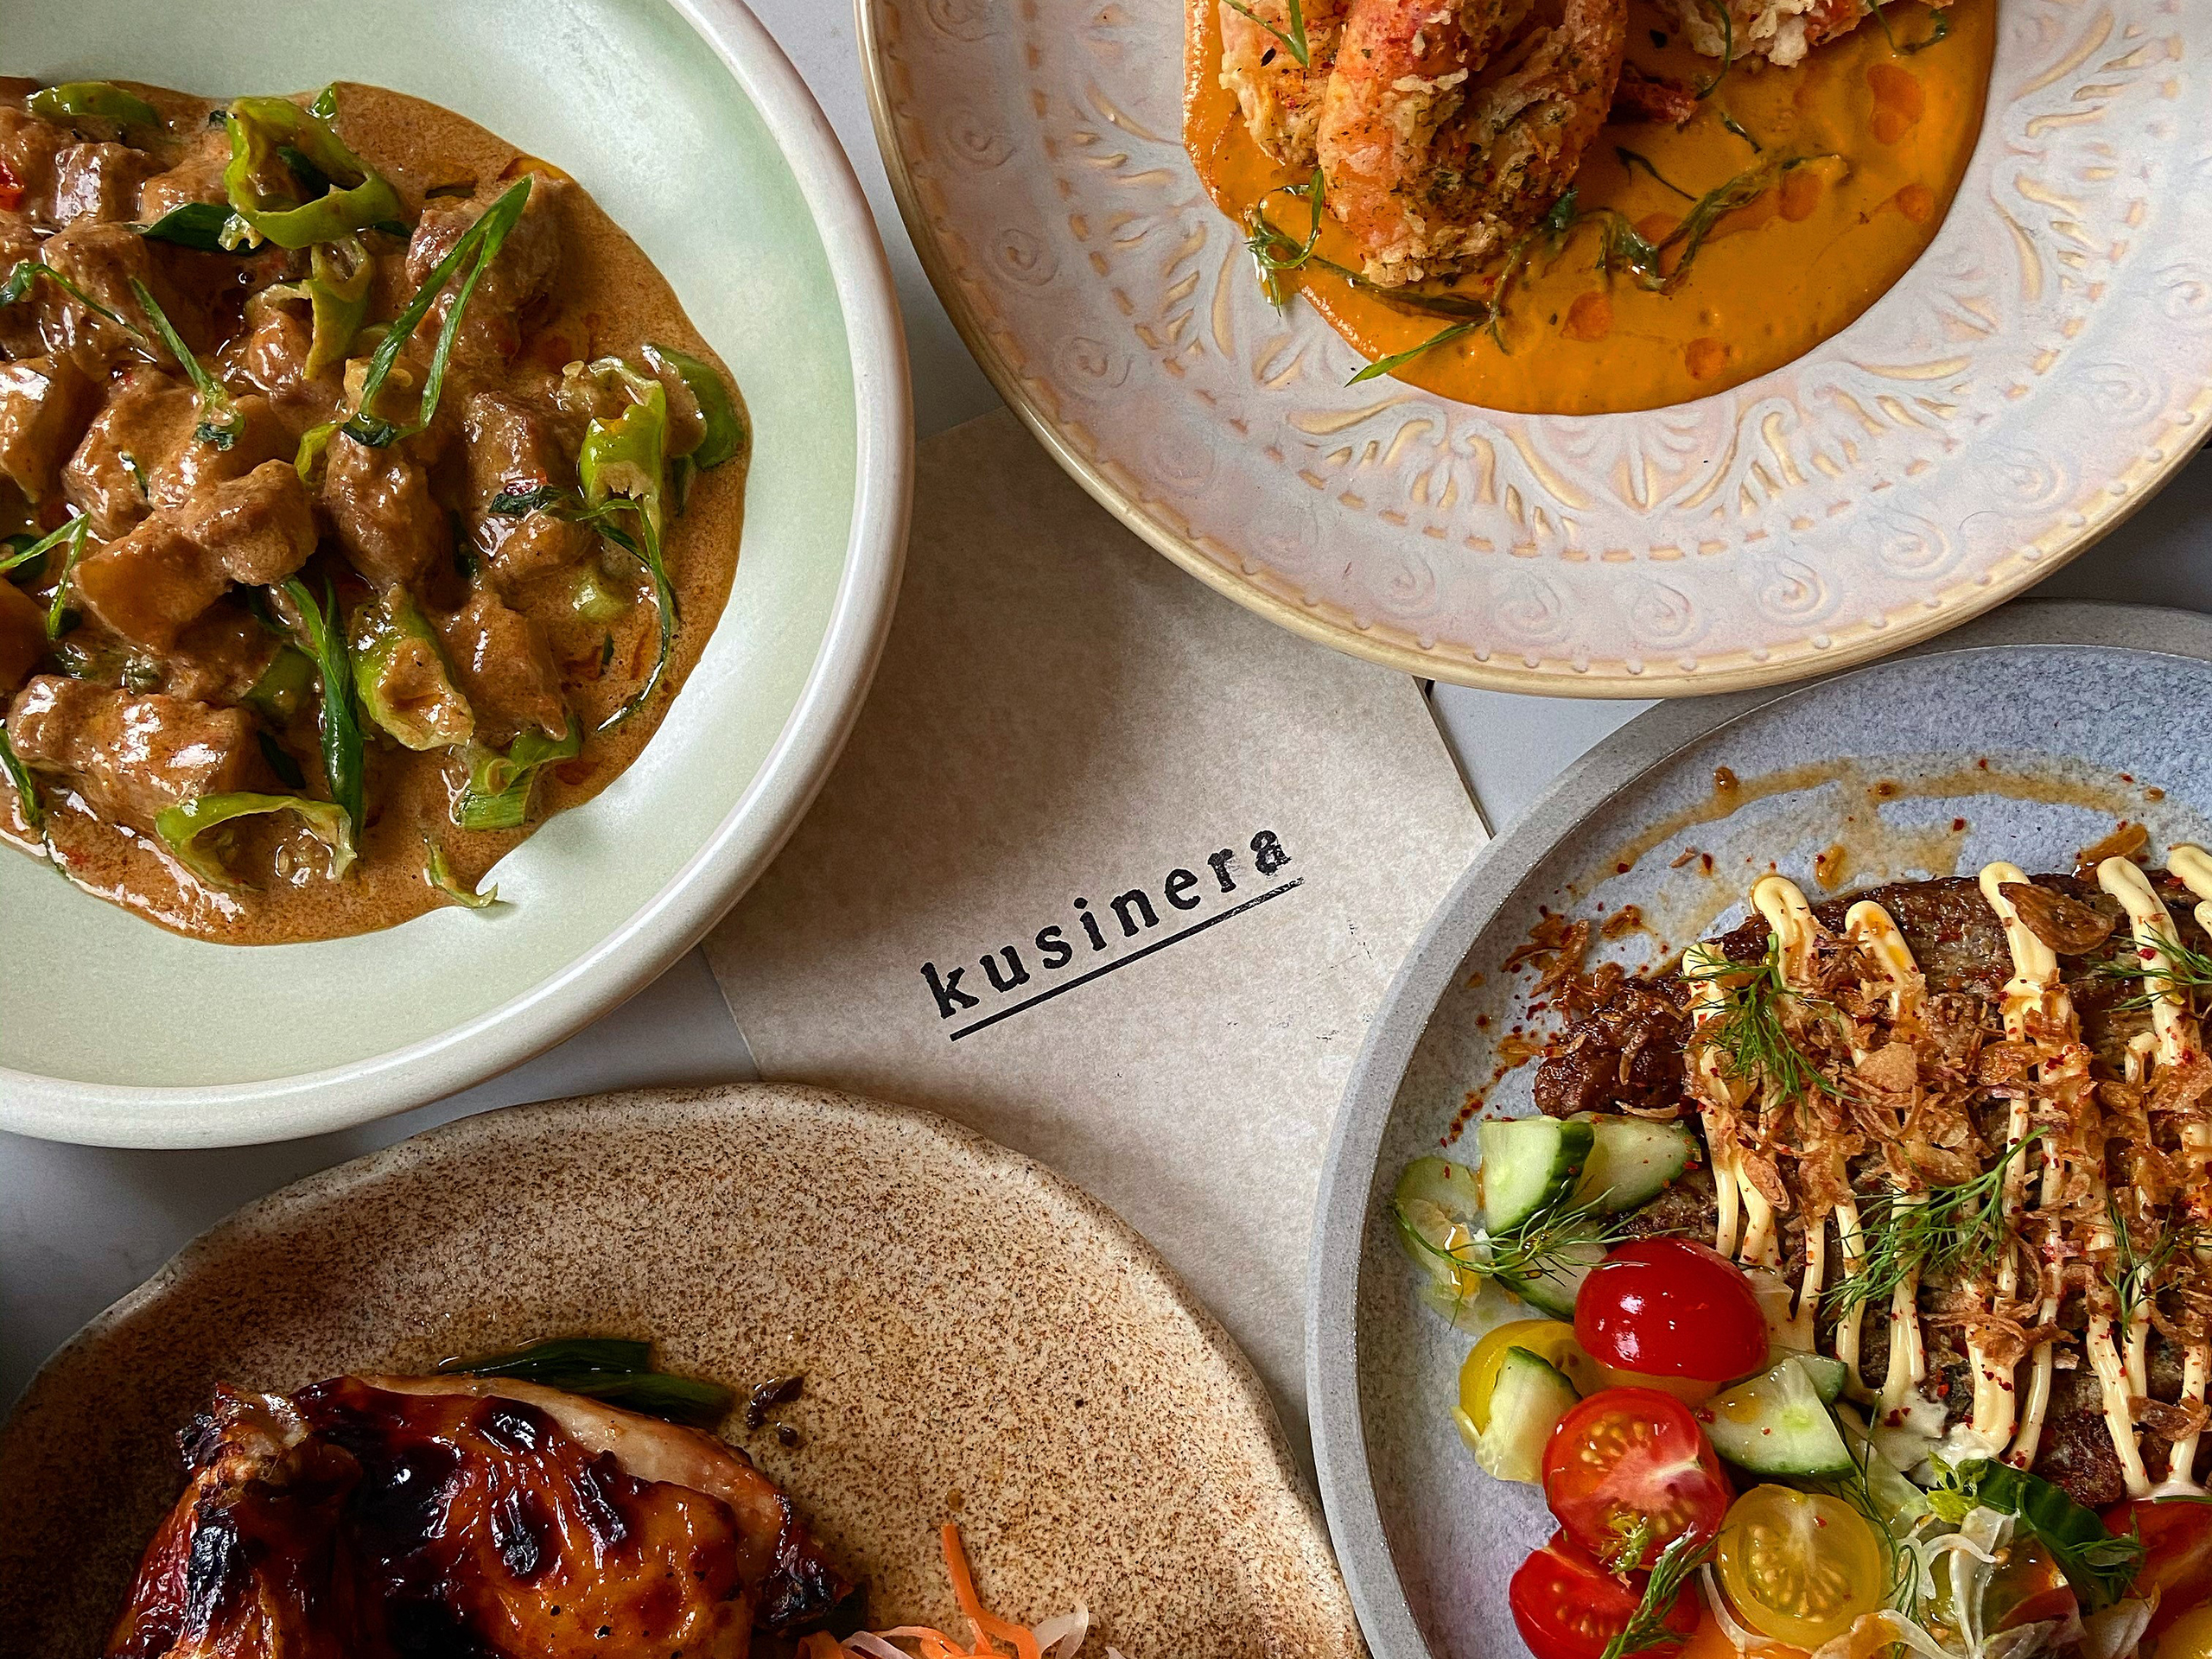 Kusinera&#x27;s menu offerings spread across the table